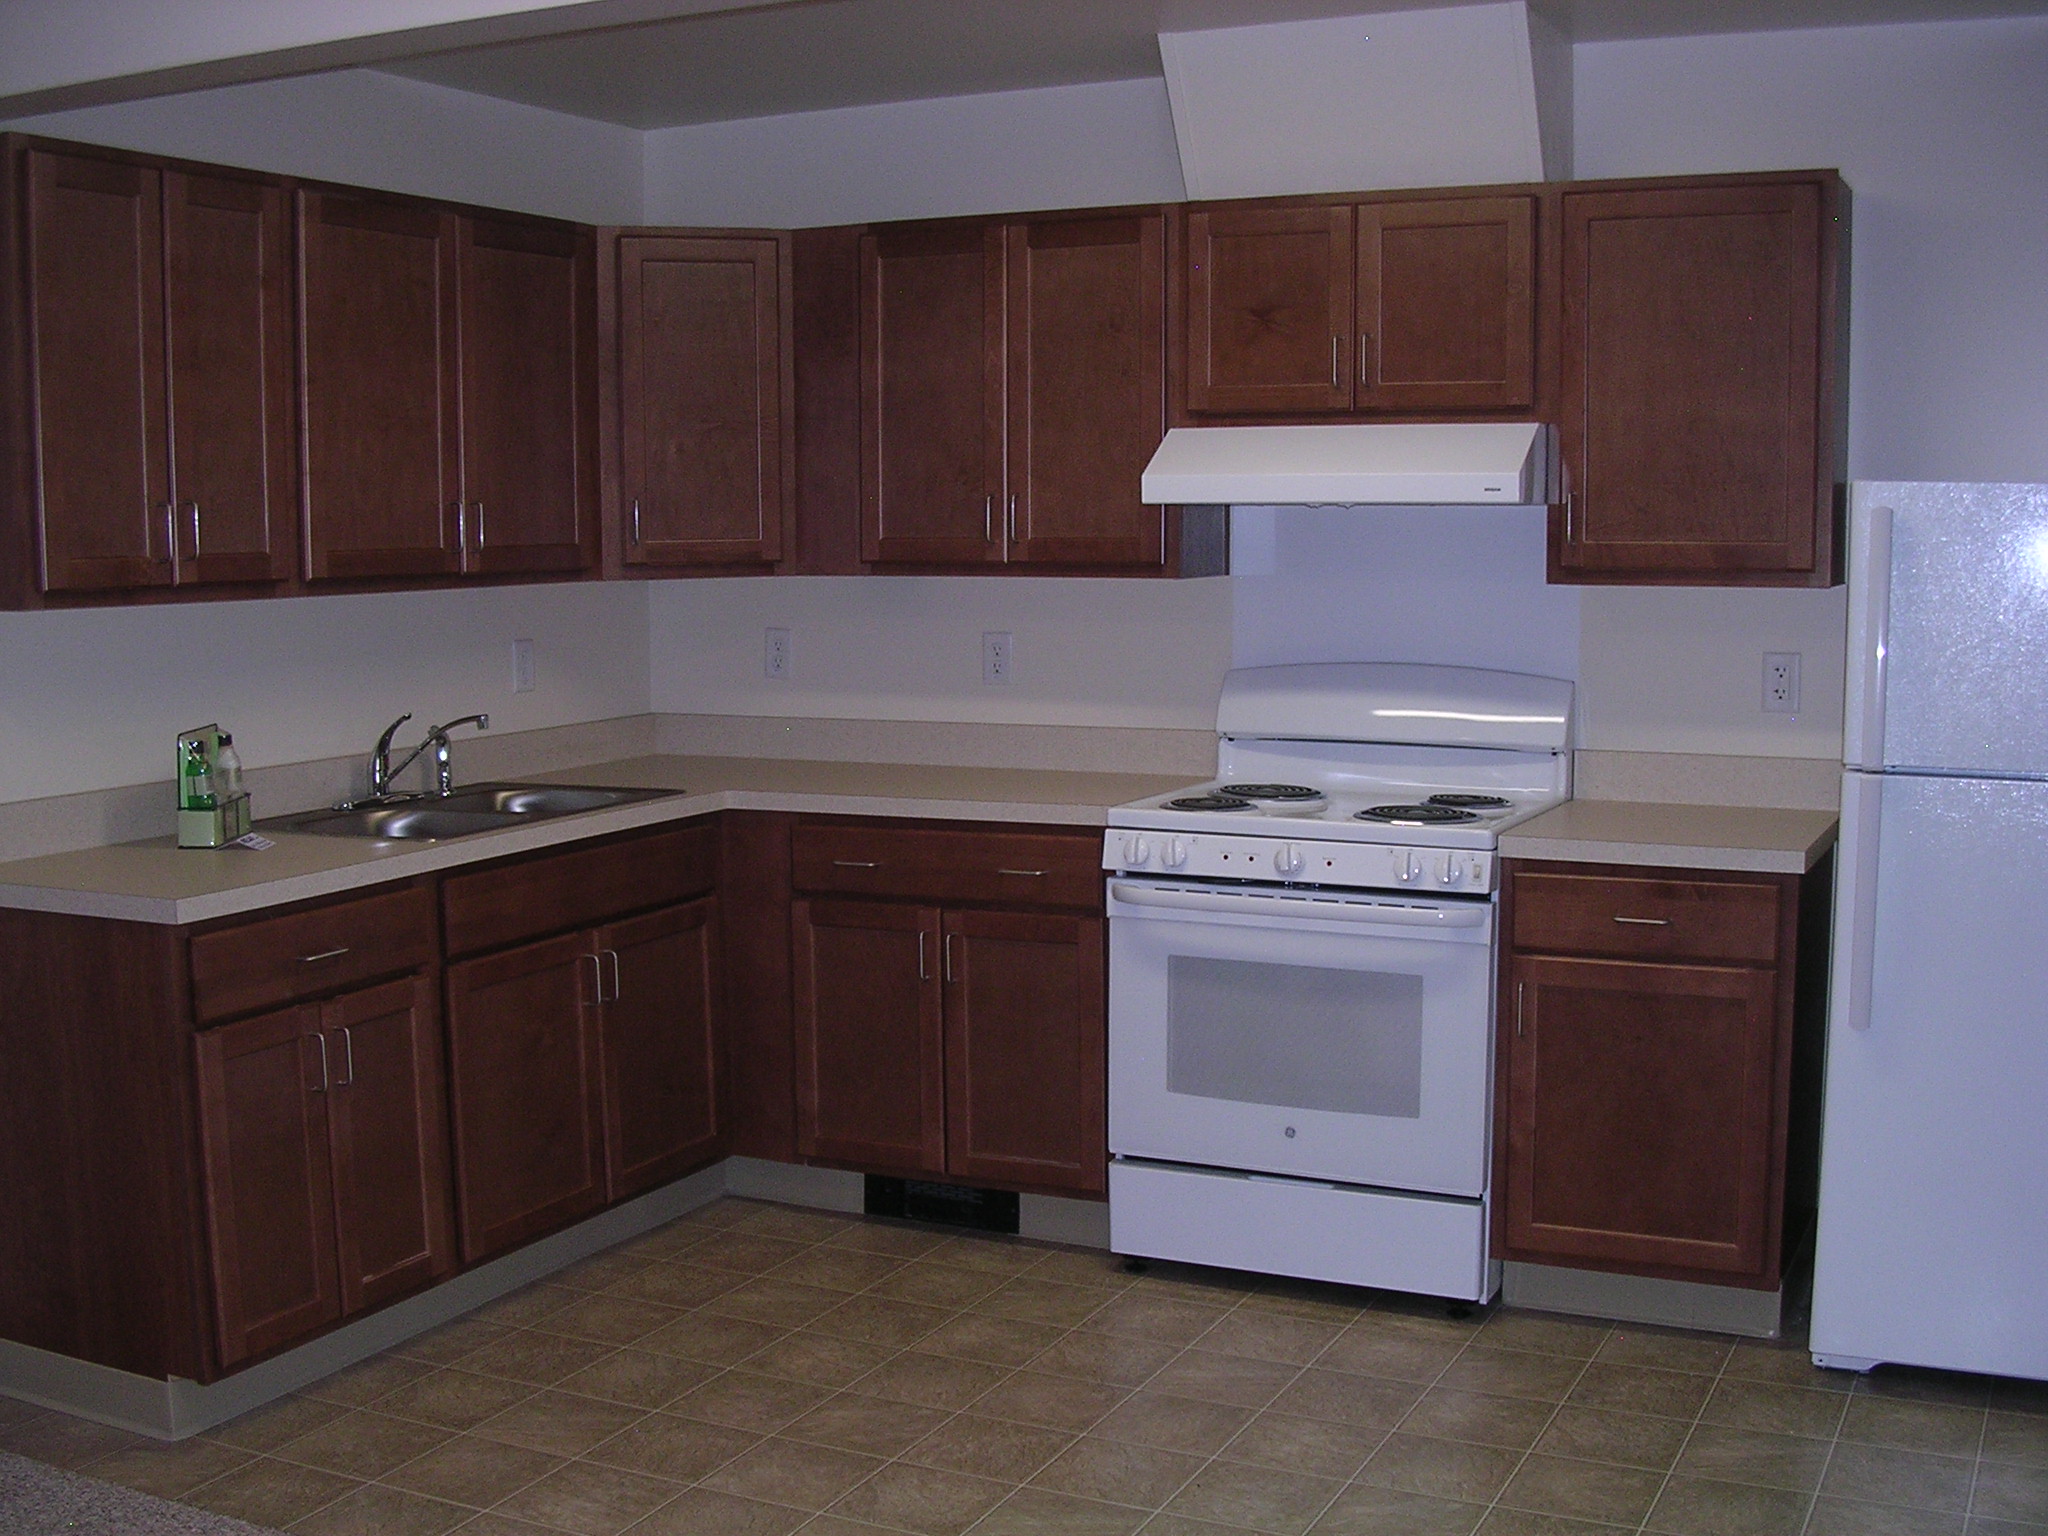 property management company client list syracuse ny full kitchen image of island hollow senior apartment